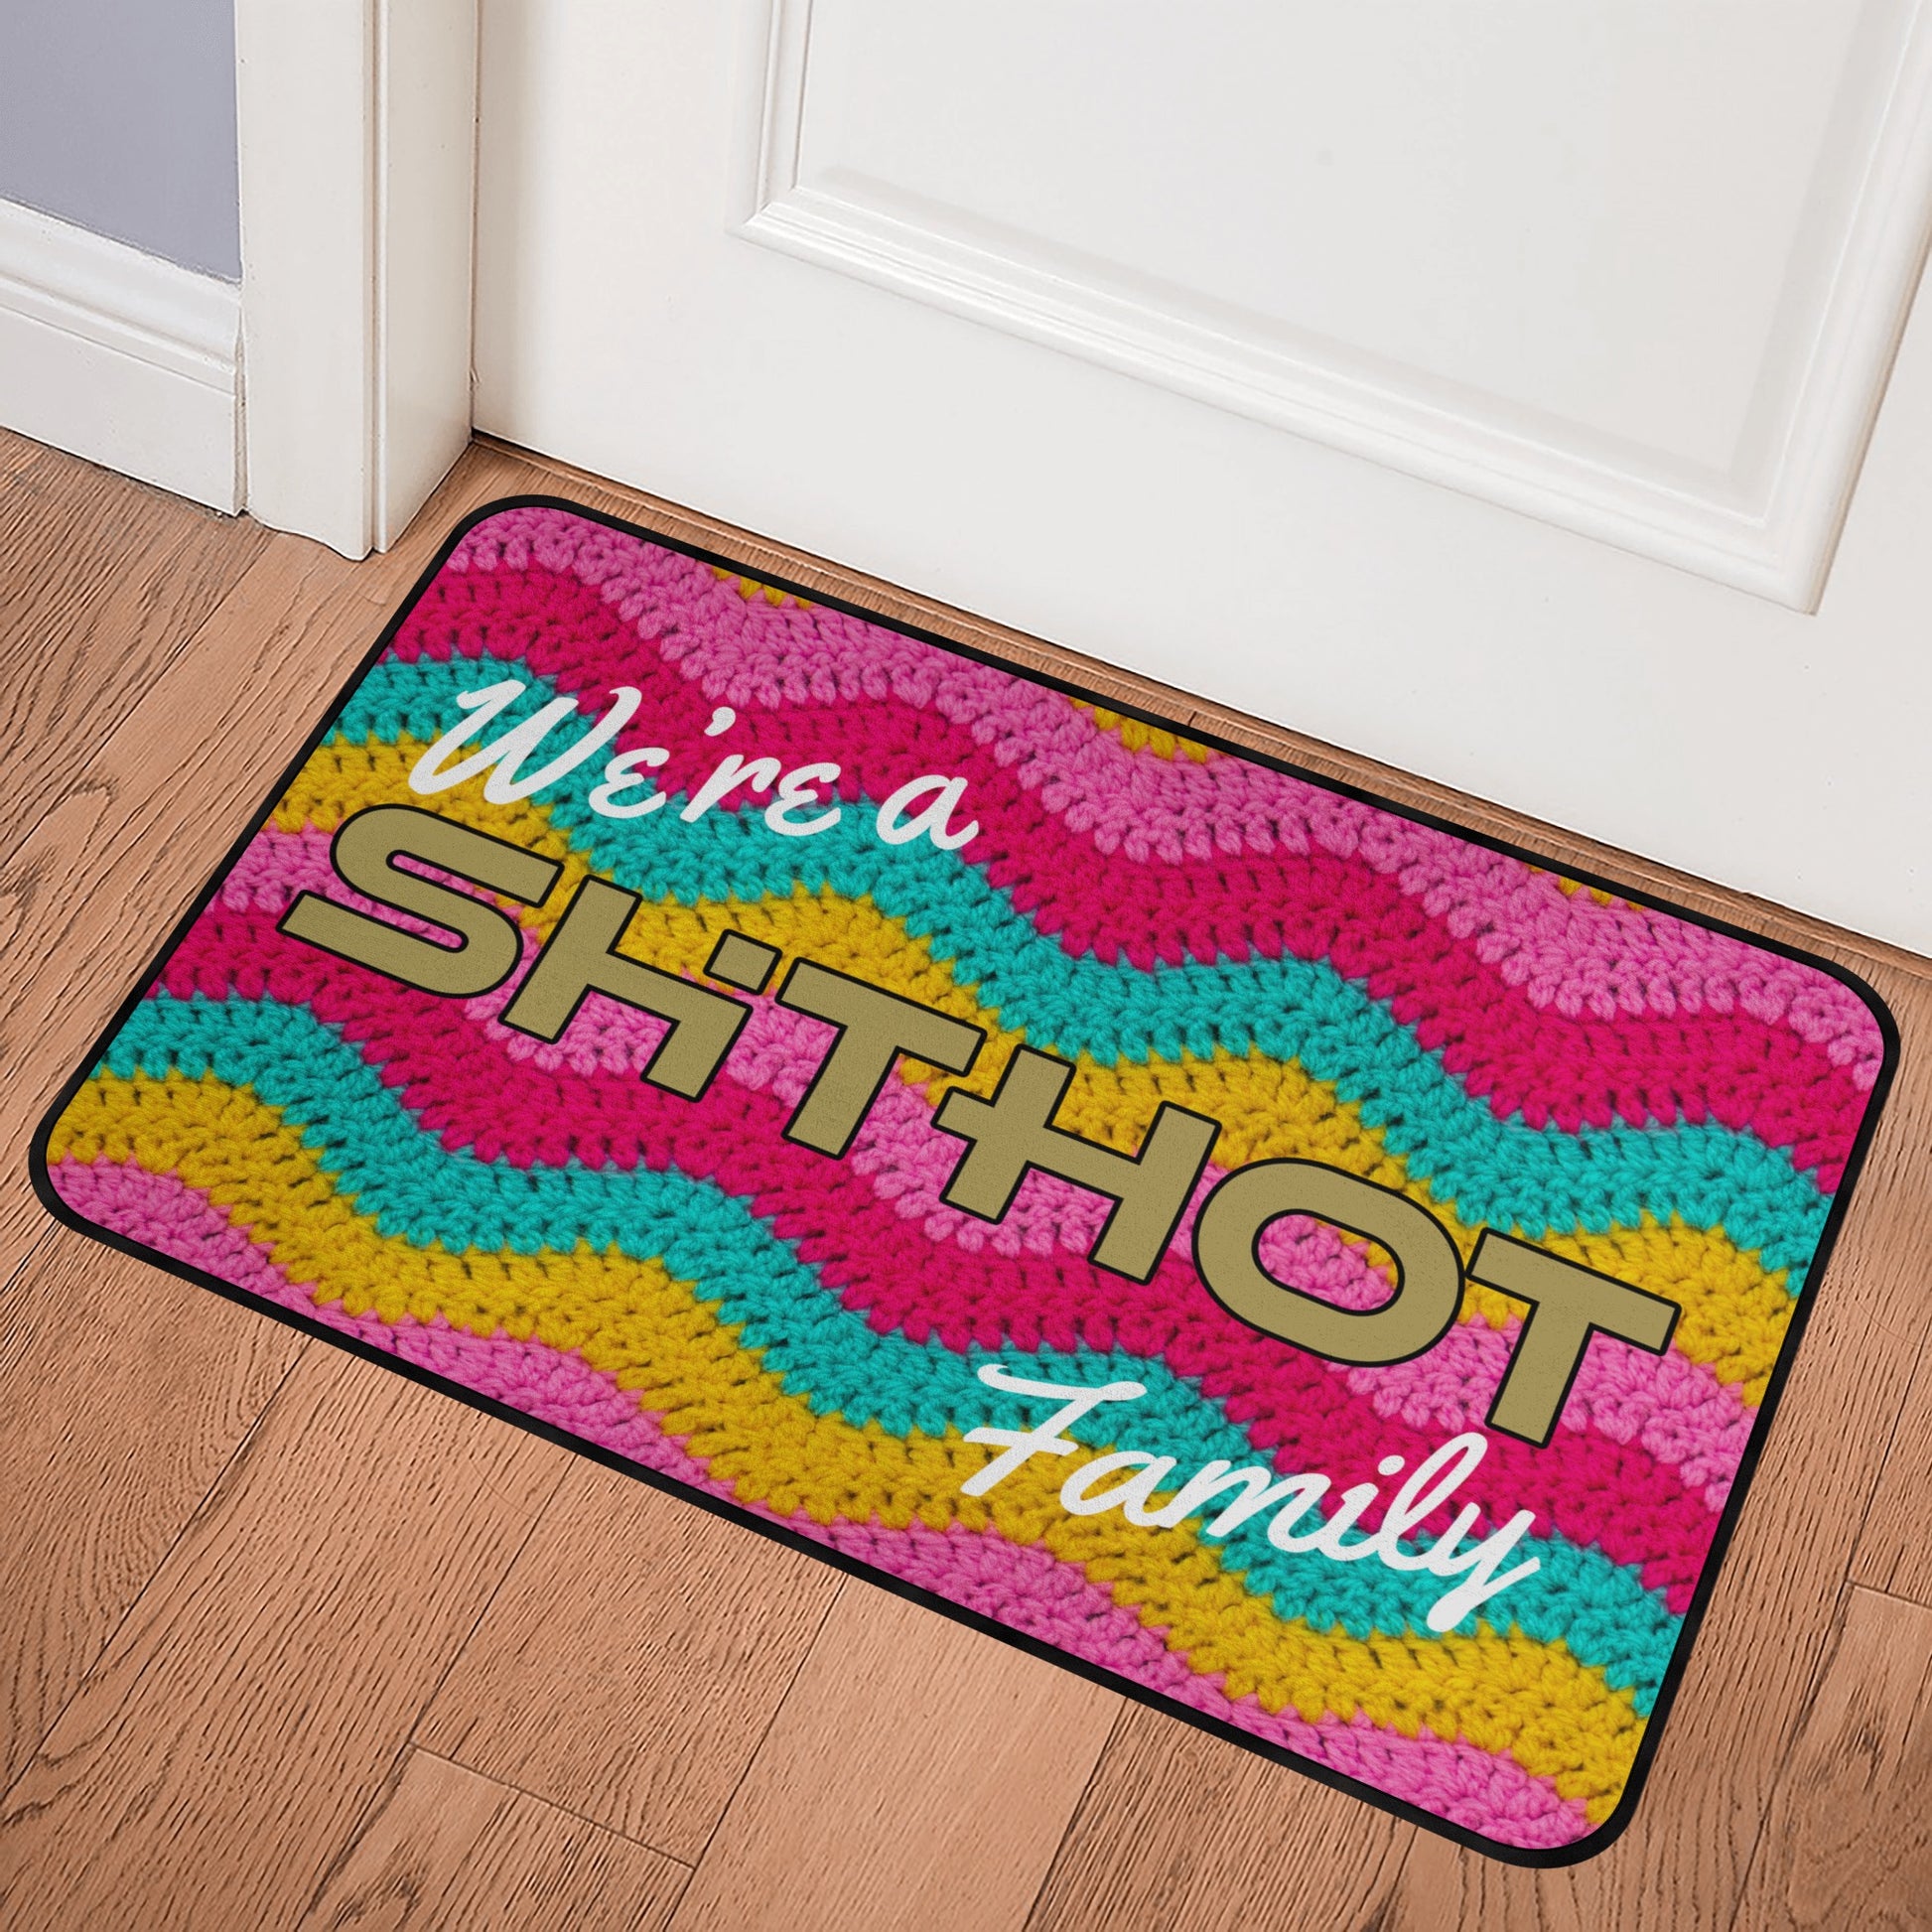 ShitHot Doormat Crochet - We're A ShitHot Family